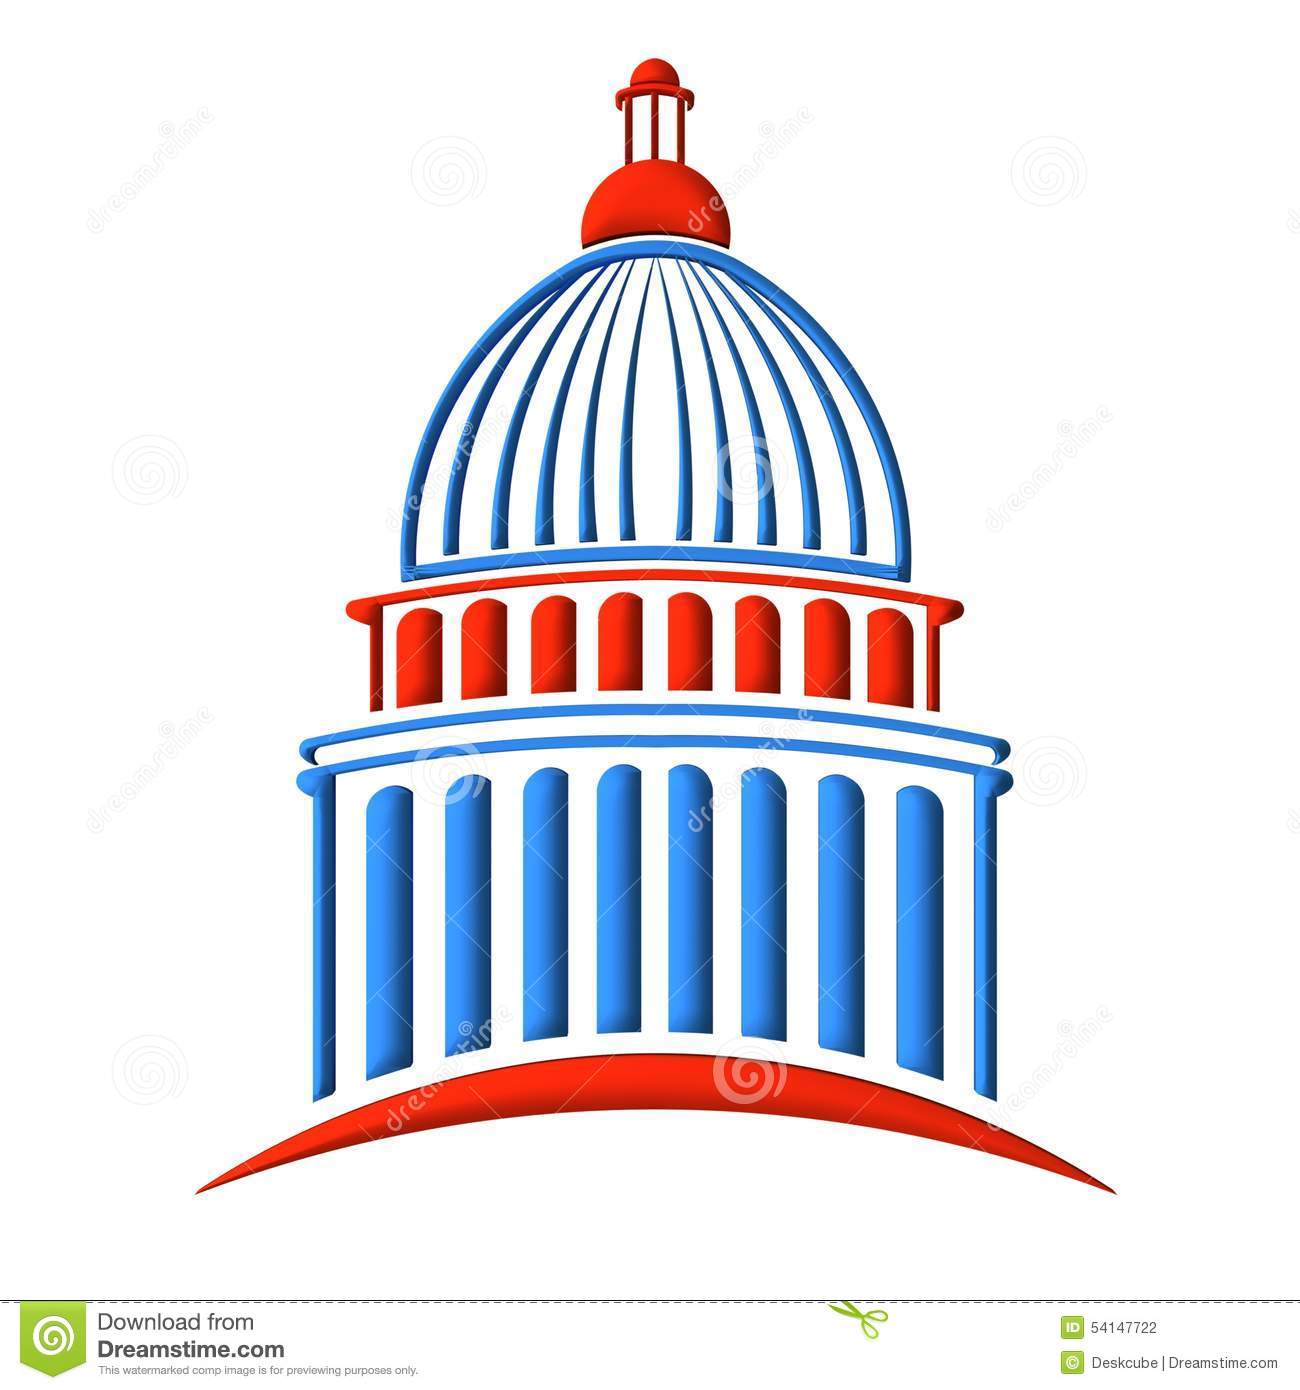 congress clipart dome capitol building